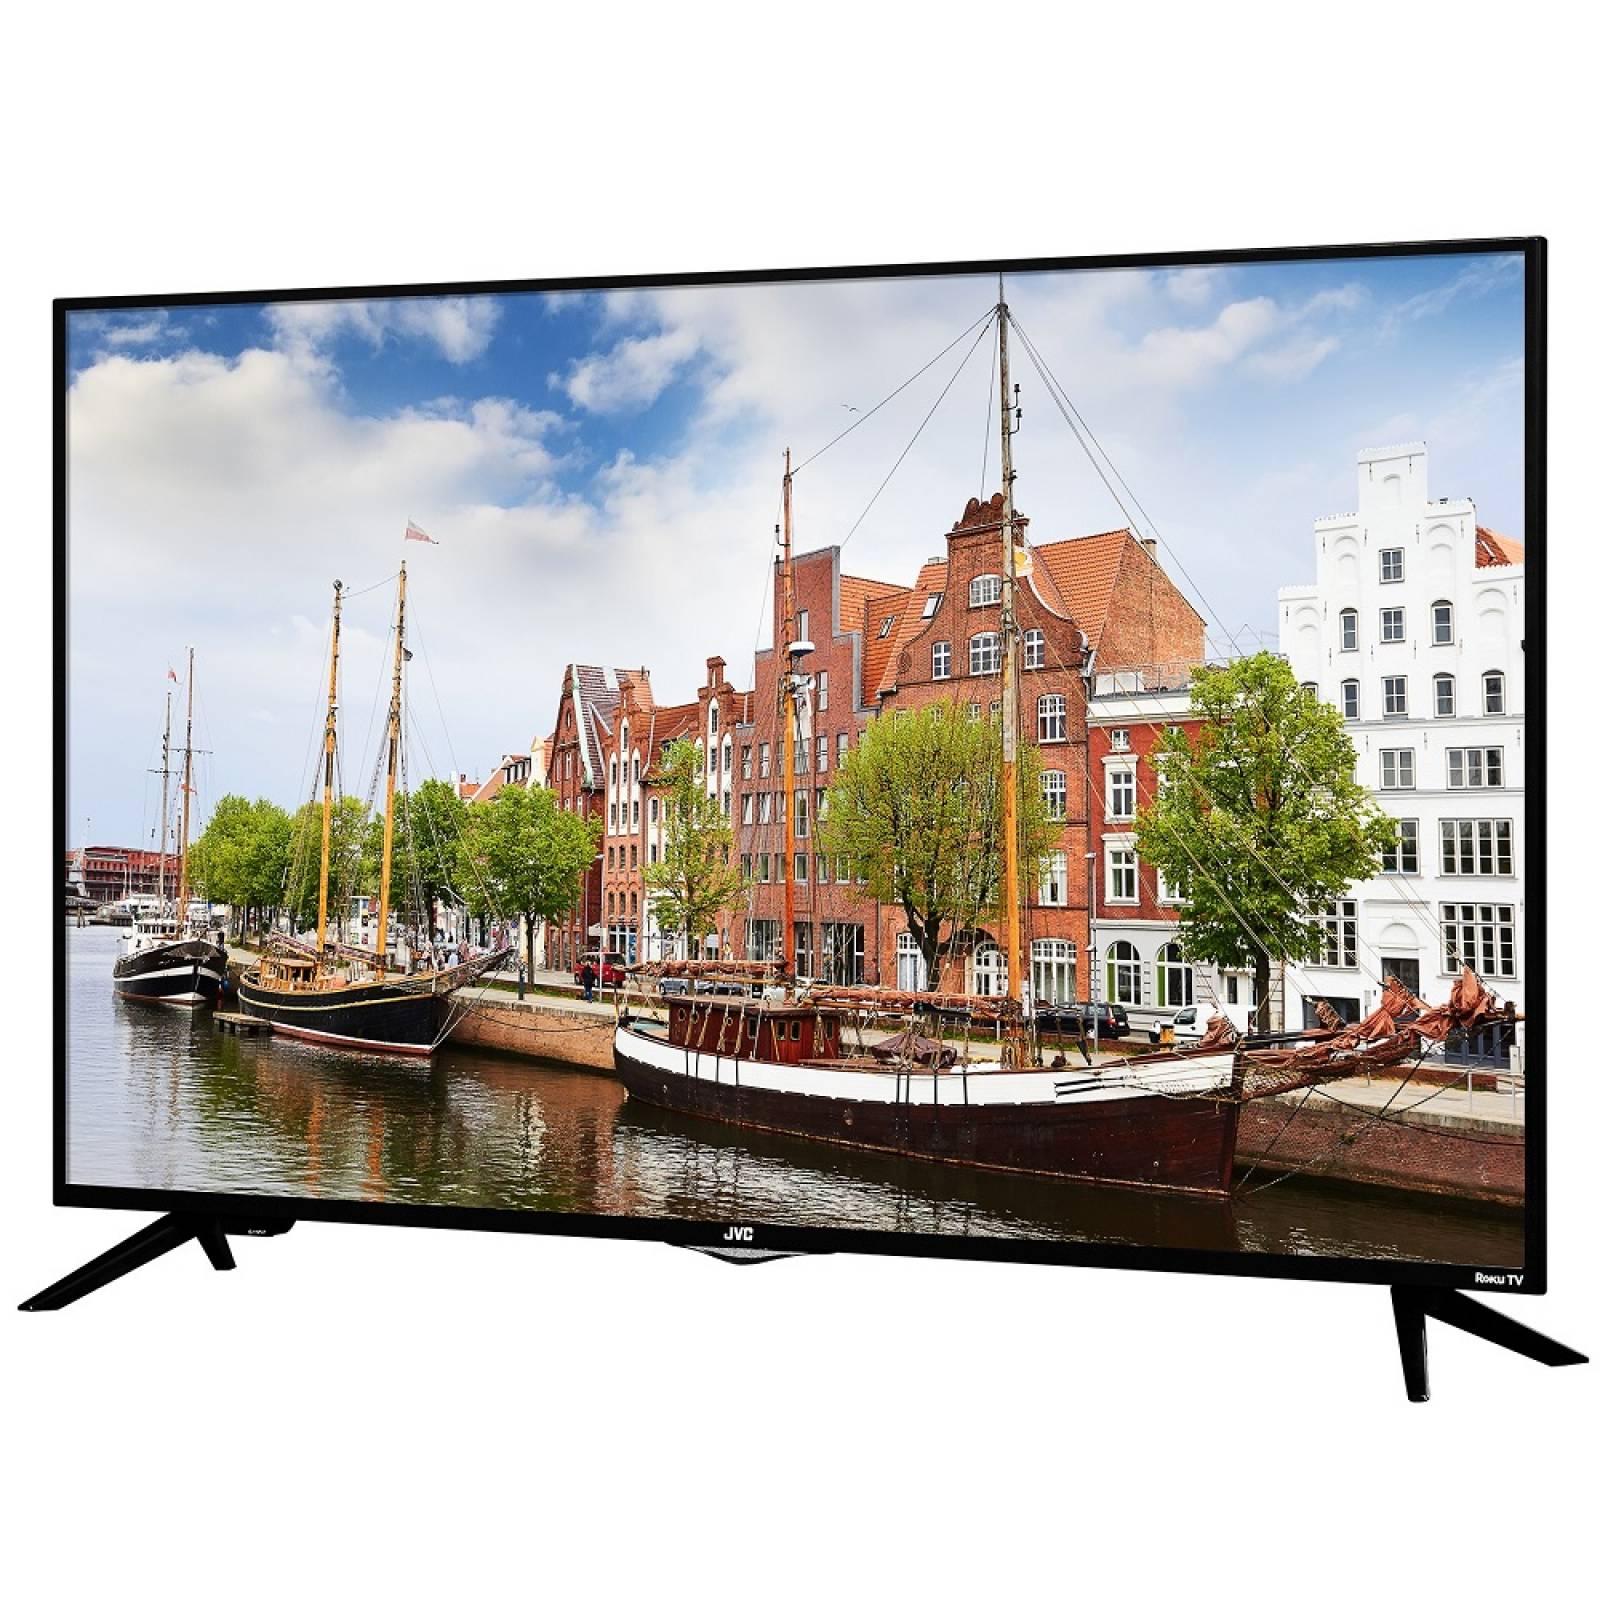 Smart TV JVC 49 Full HD LED Roku TV Wifi LT-49MAW598 - Reacondicionado